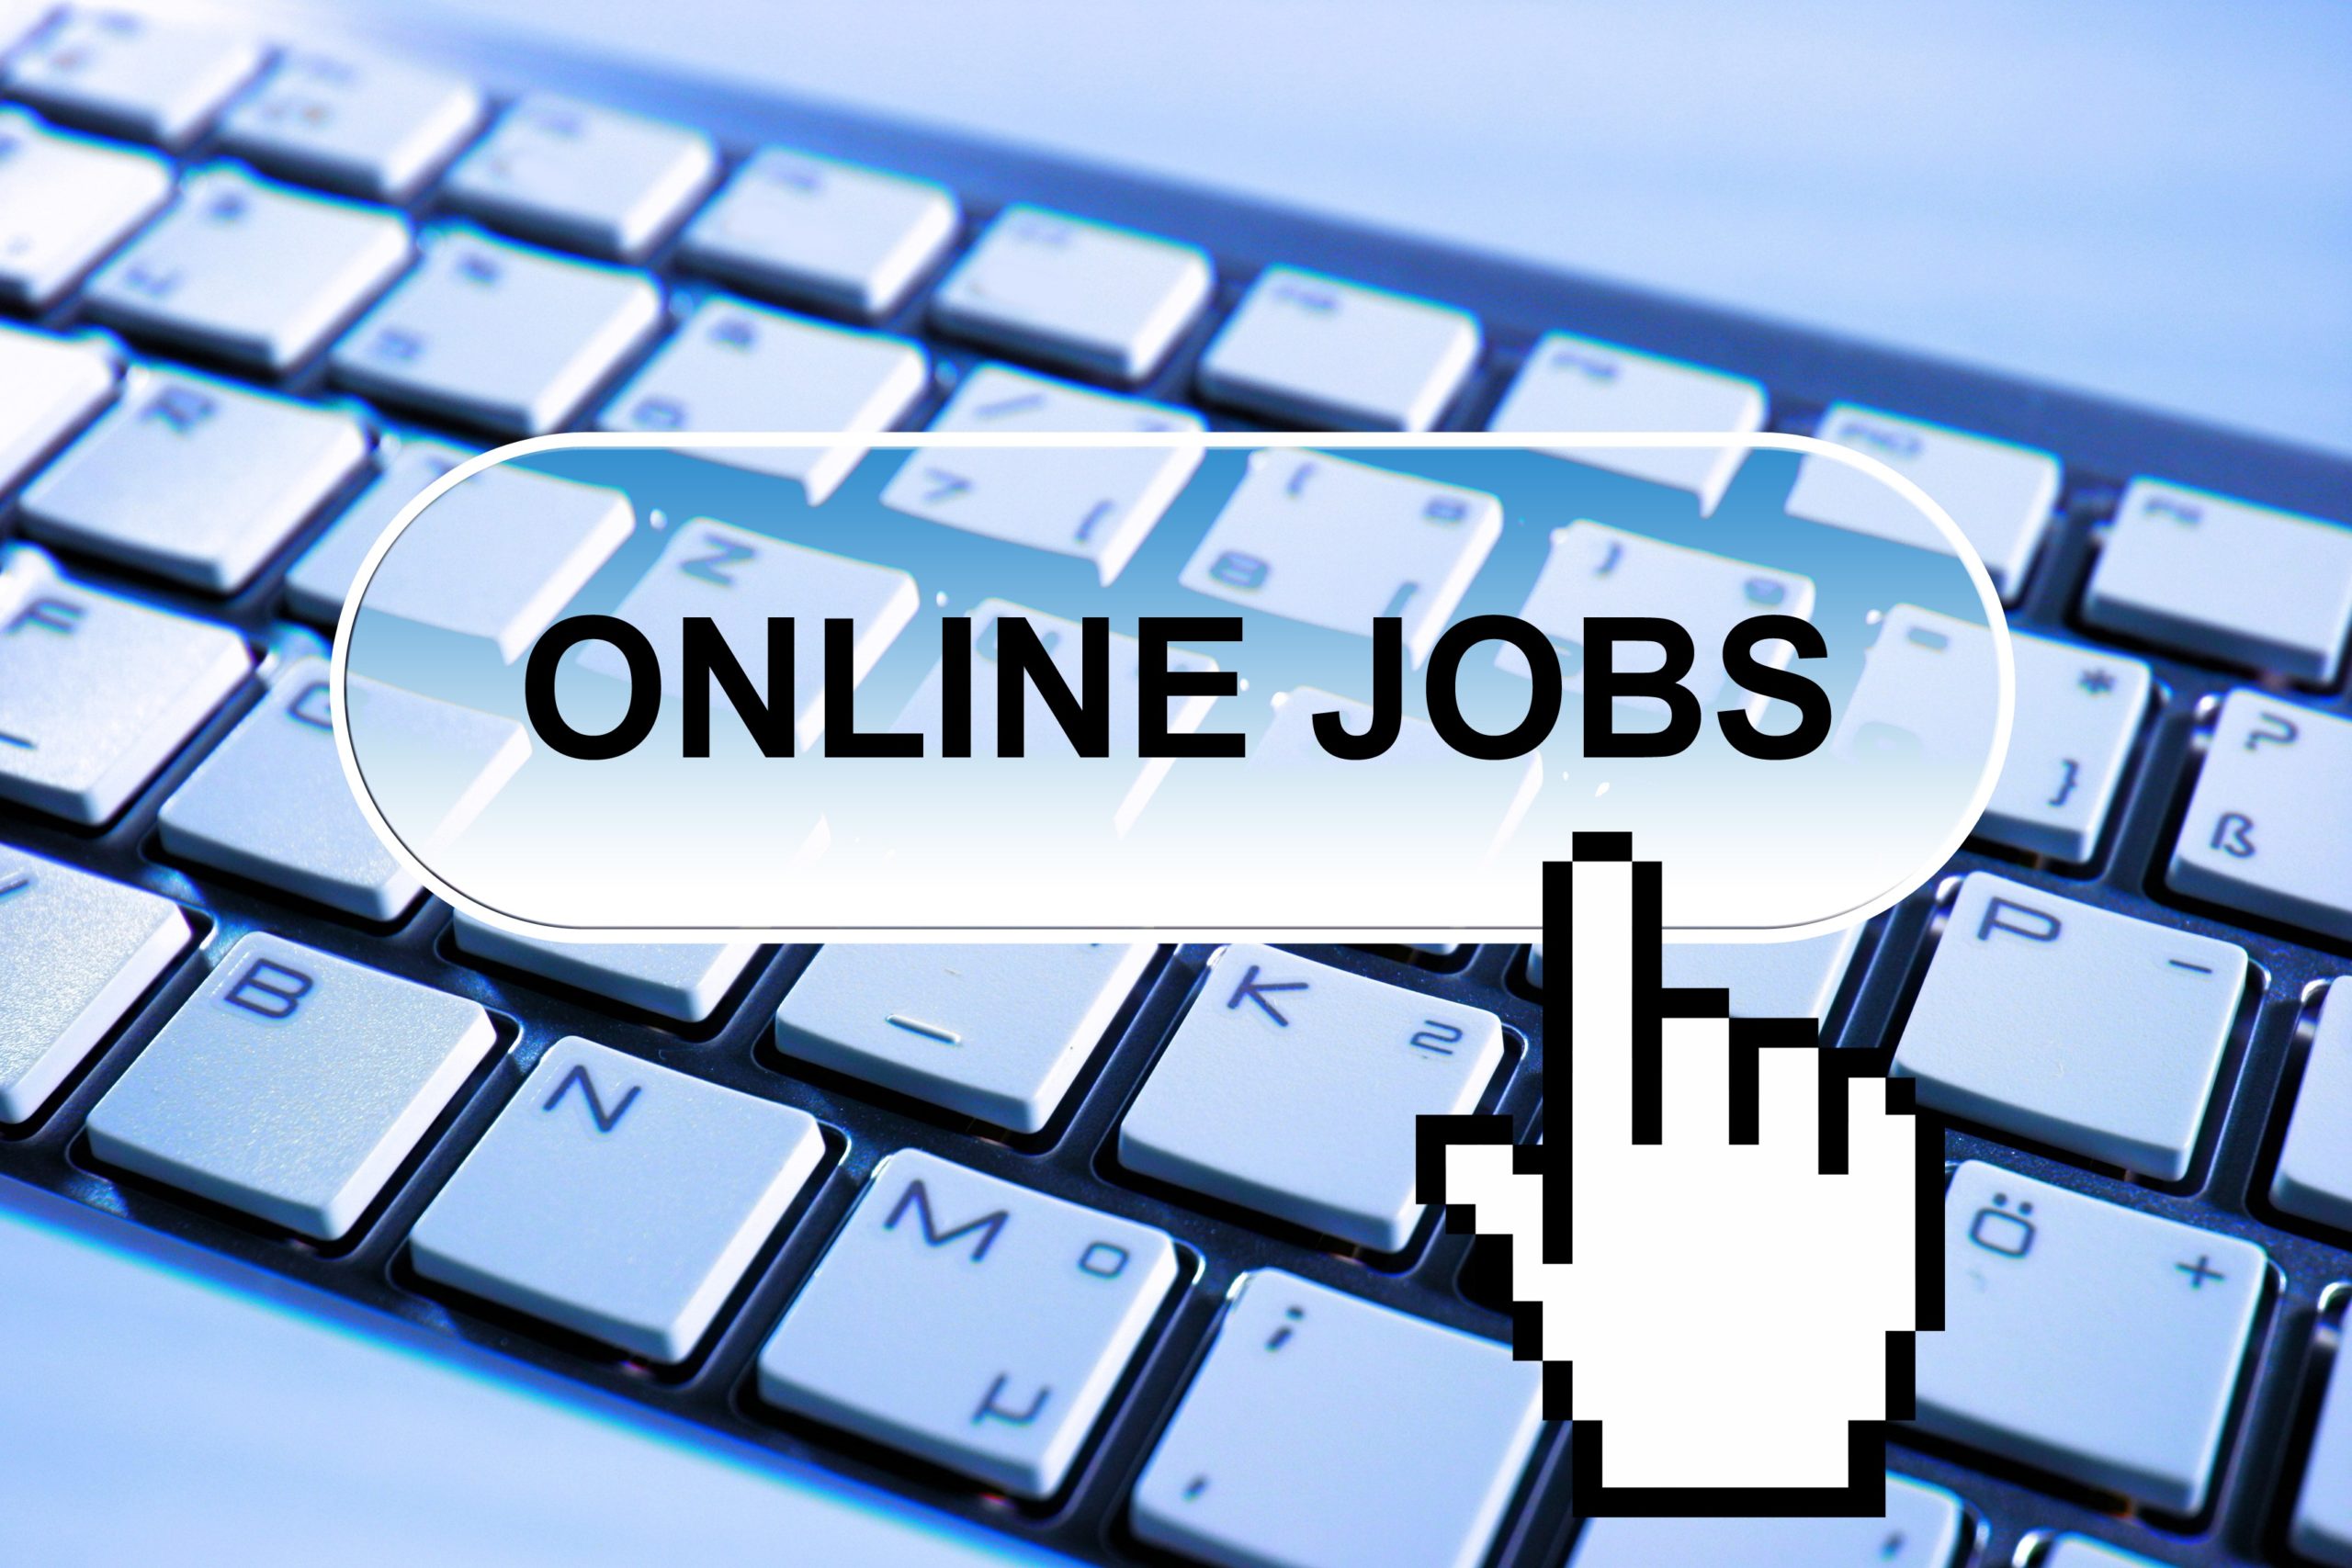 Online Jobs and Job Software